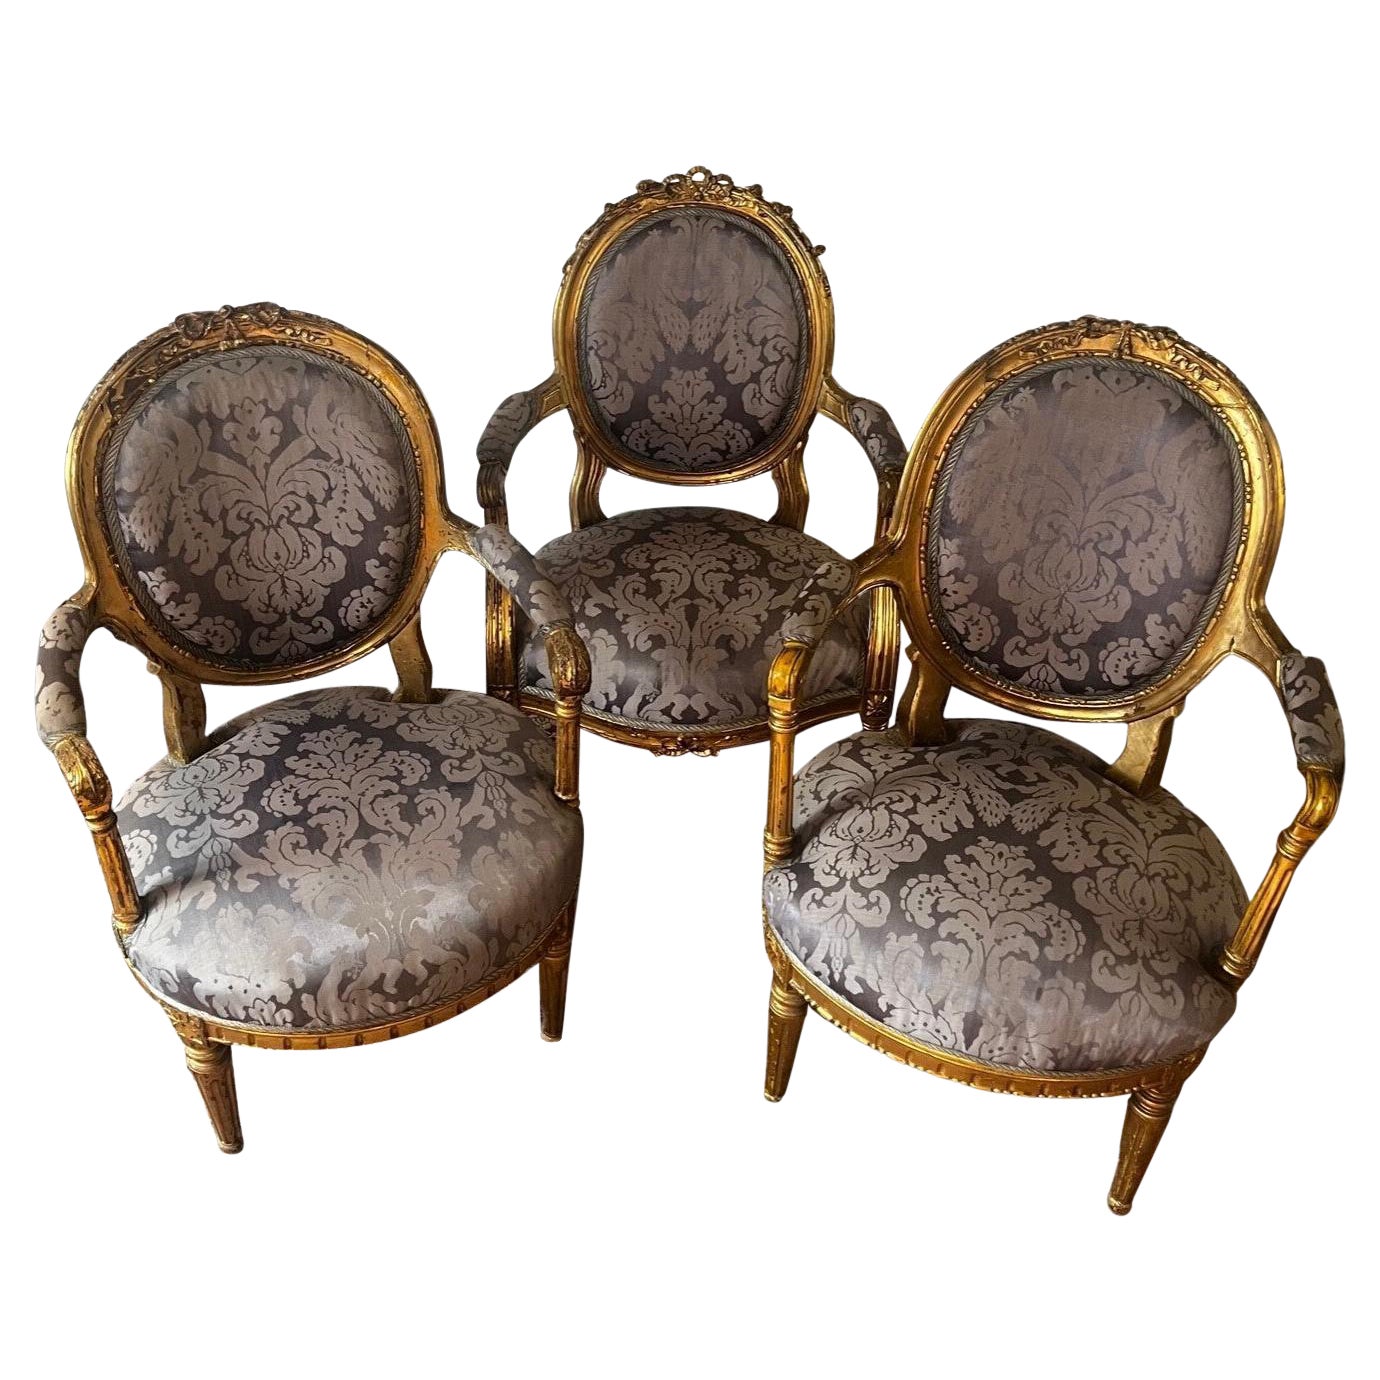 Set aus drei originalen vergoldeten Louis-XVI-Sesseln aus dem 18. Jahrhundert